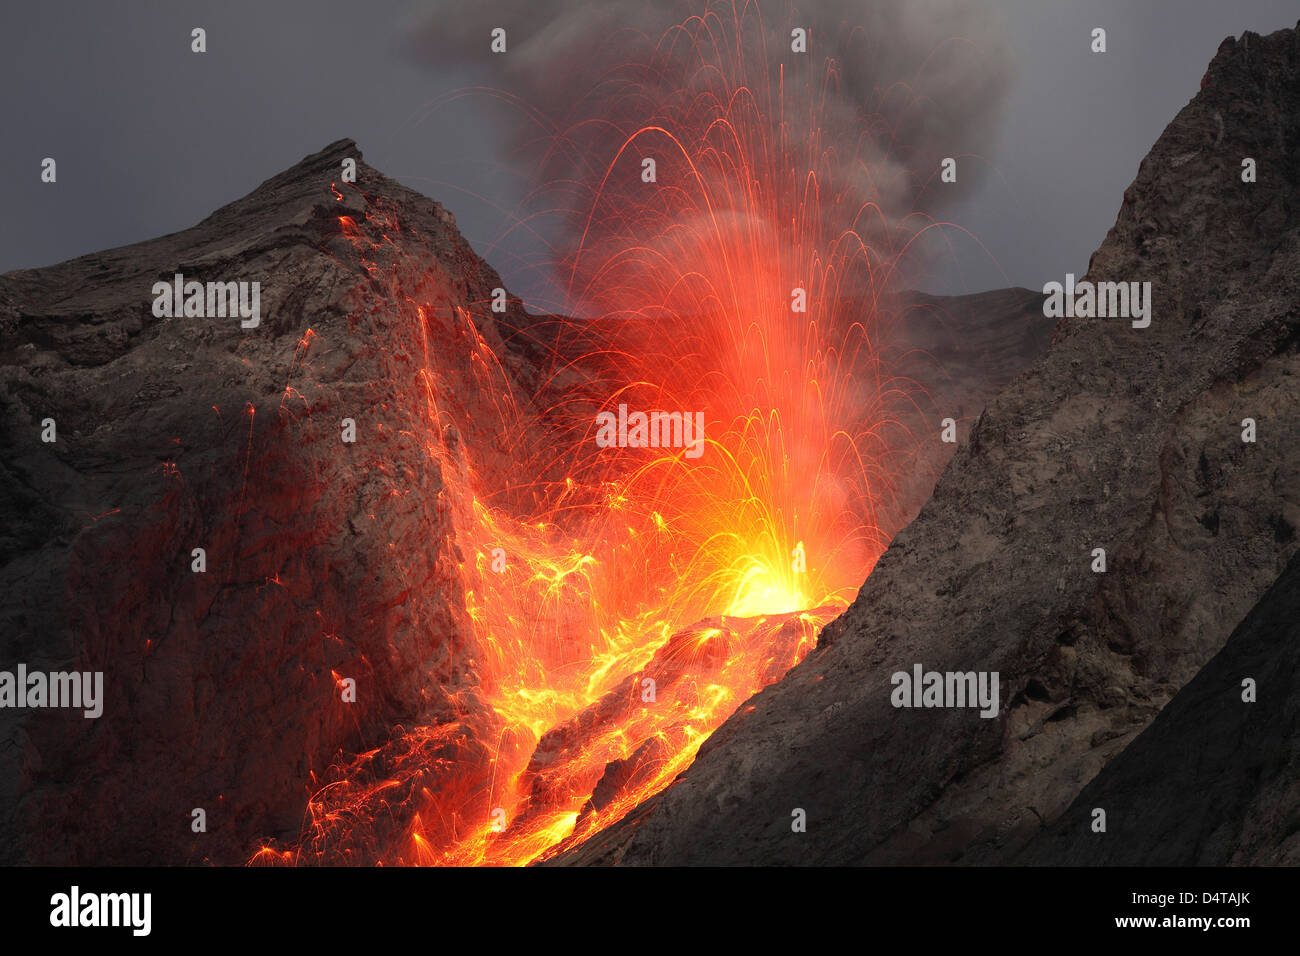 Strombolian type eruption of Batu Tara volcano, Indonesia. Stock Photo